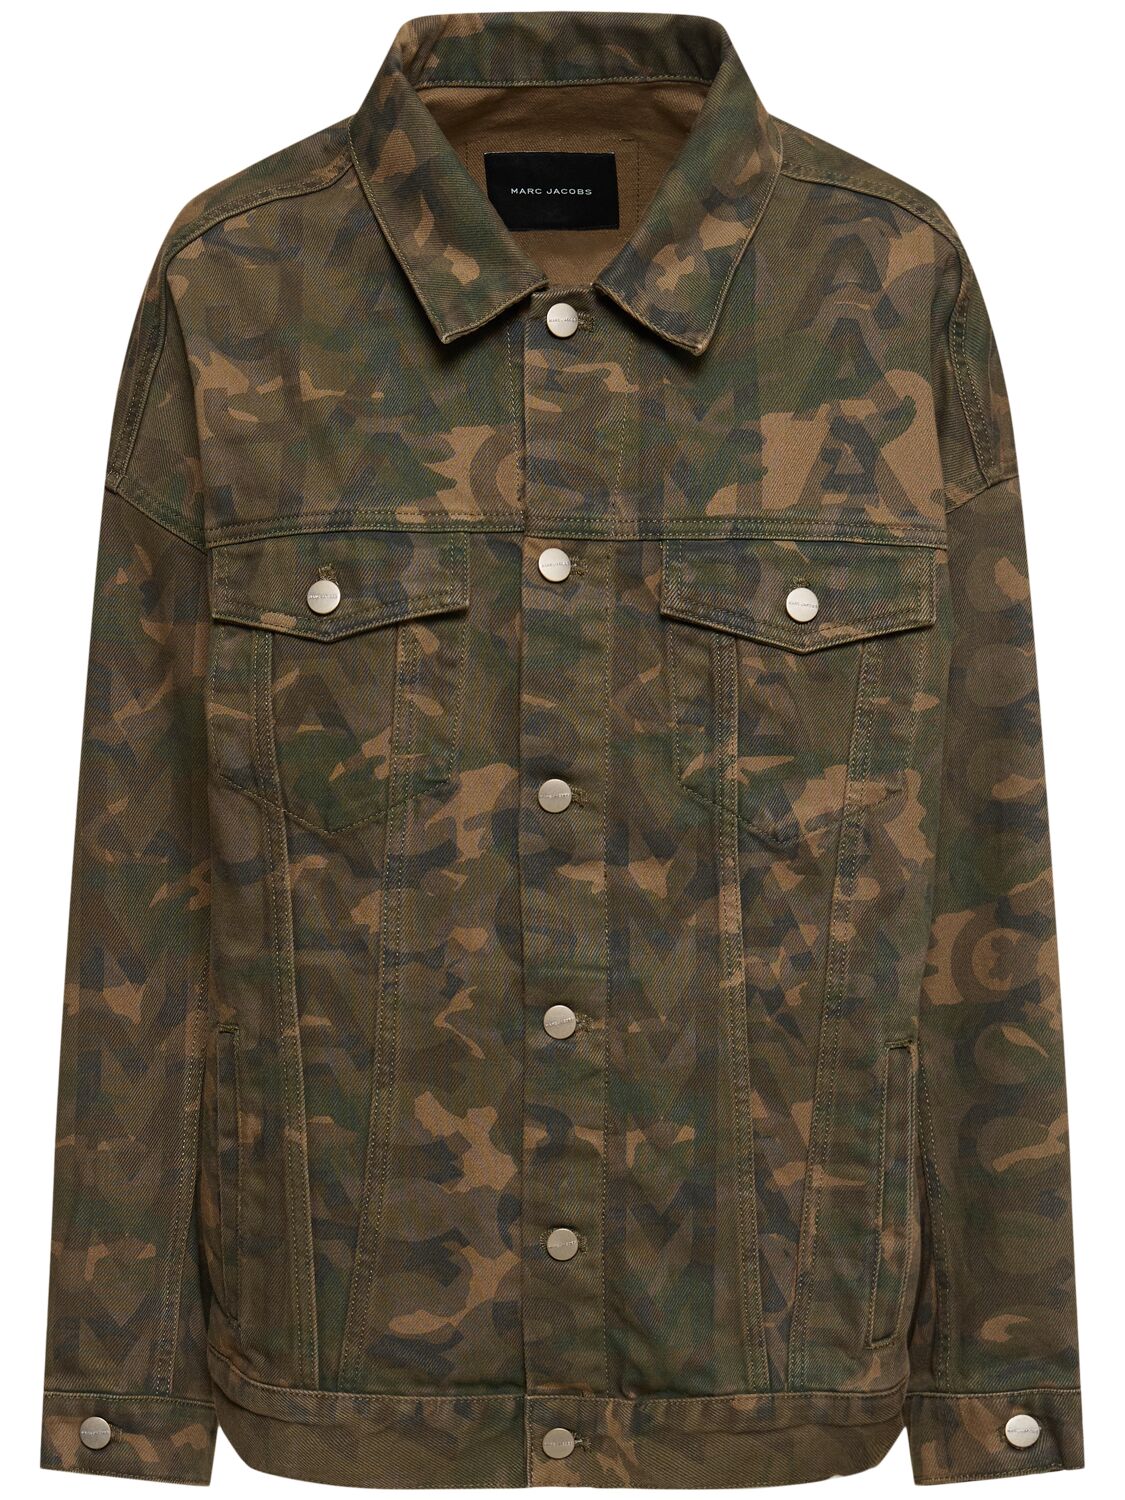 Marc Jacobs Camo Big Jacket In Camouflage